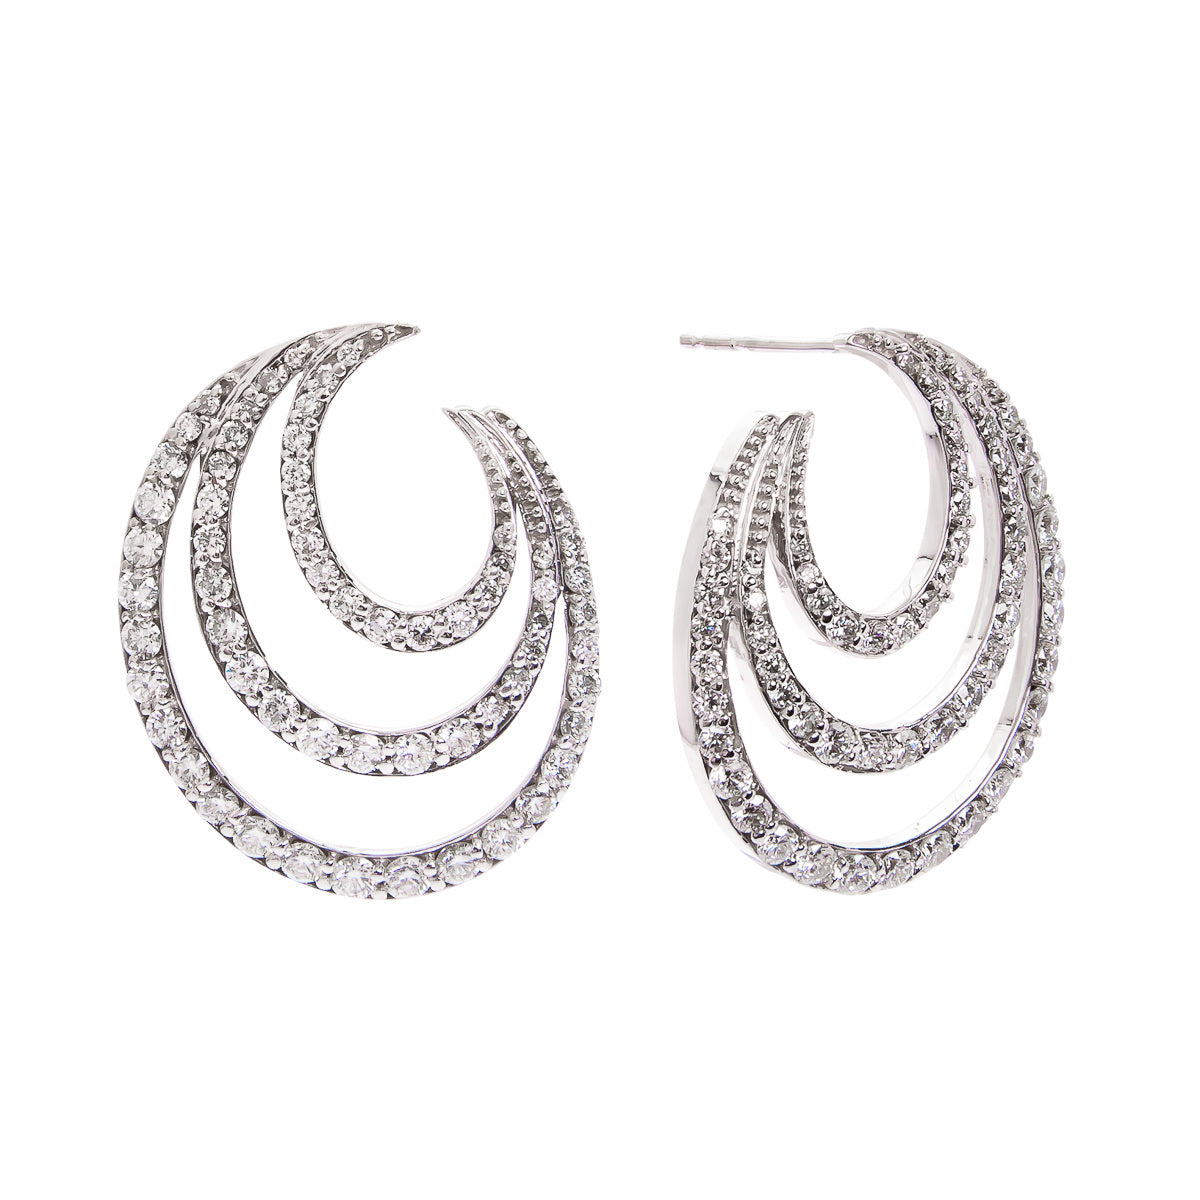 Sabel Collection 14K White Gold Three Row Diamond Earrings